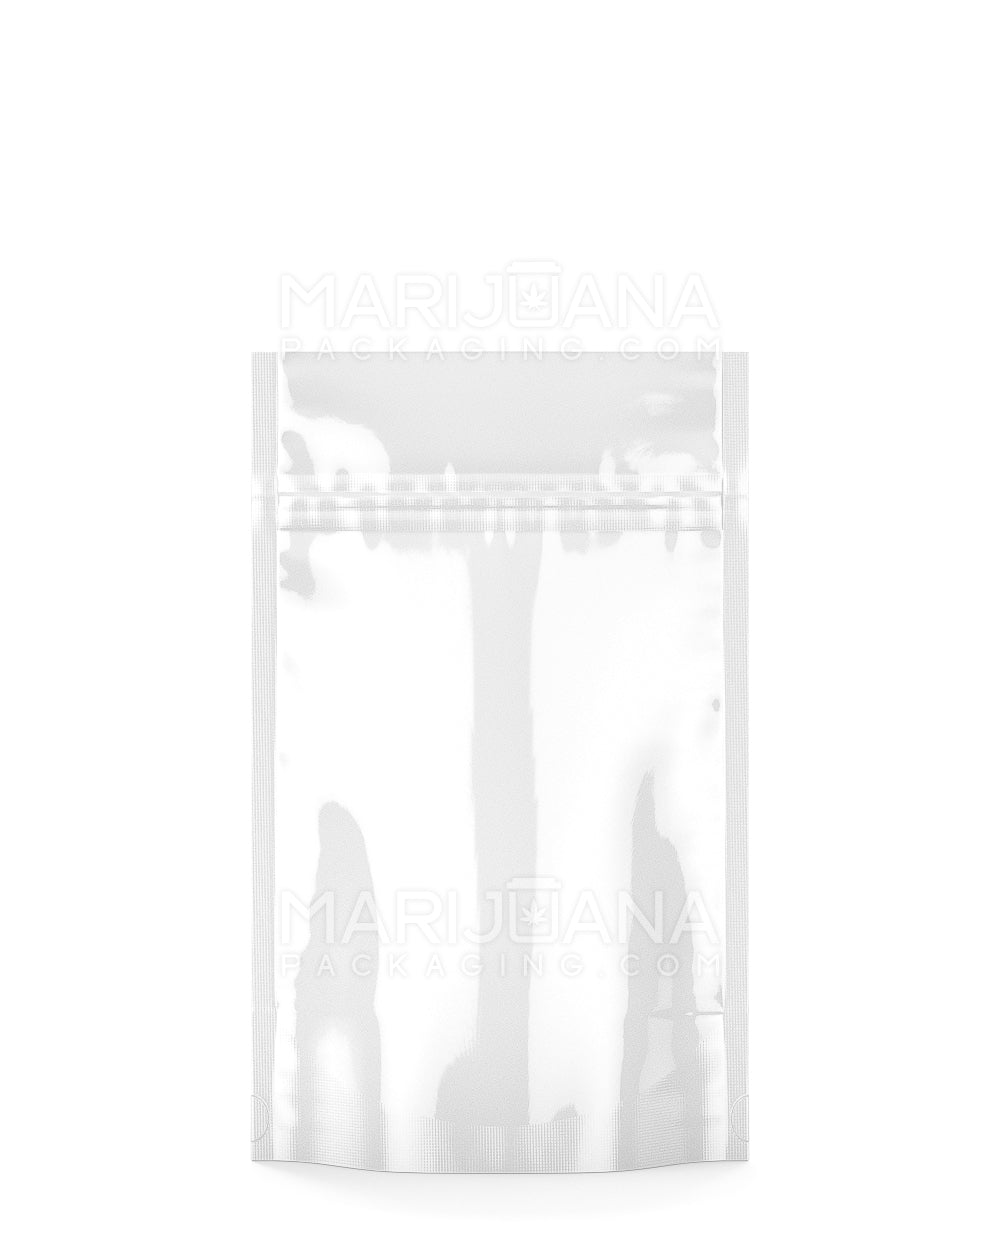 Tamper Evident | Glossy White Mylar Bag | 4in x 6.5in - 7g - 1000 Count - 2